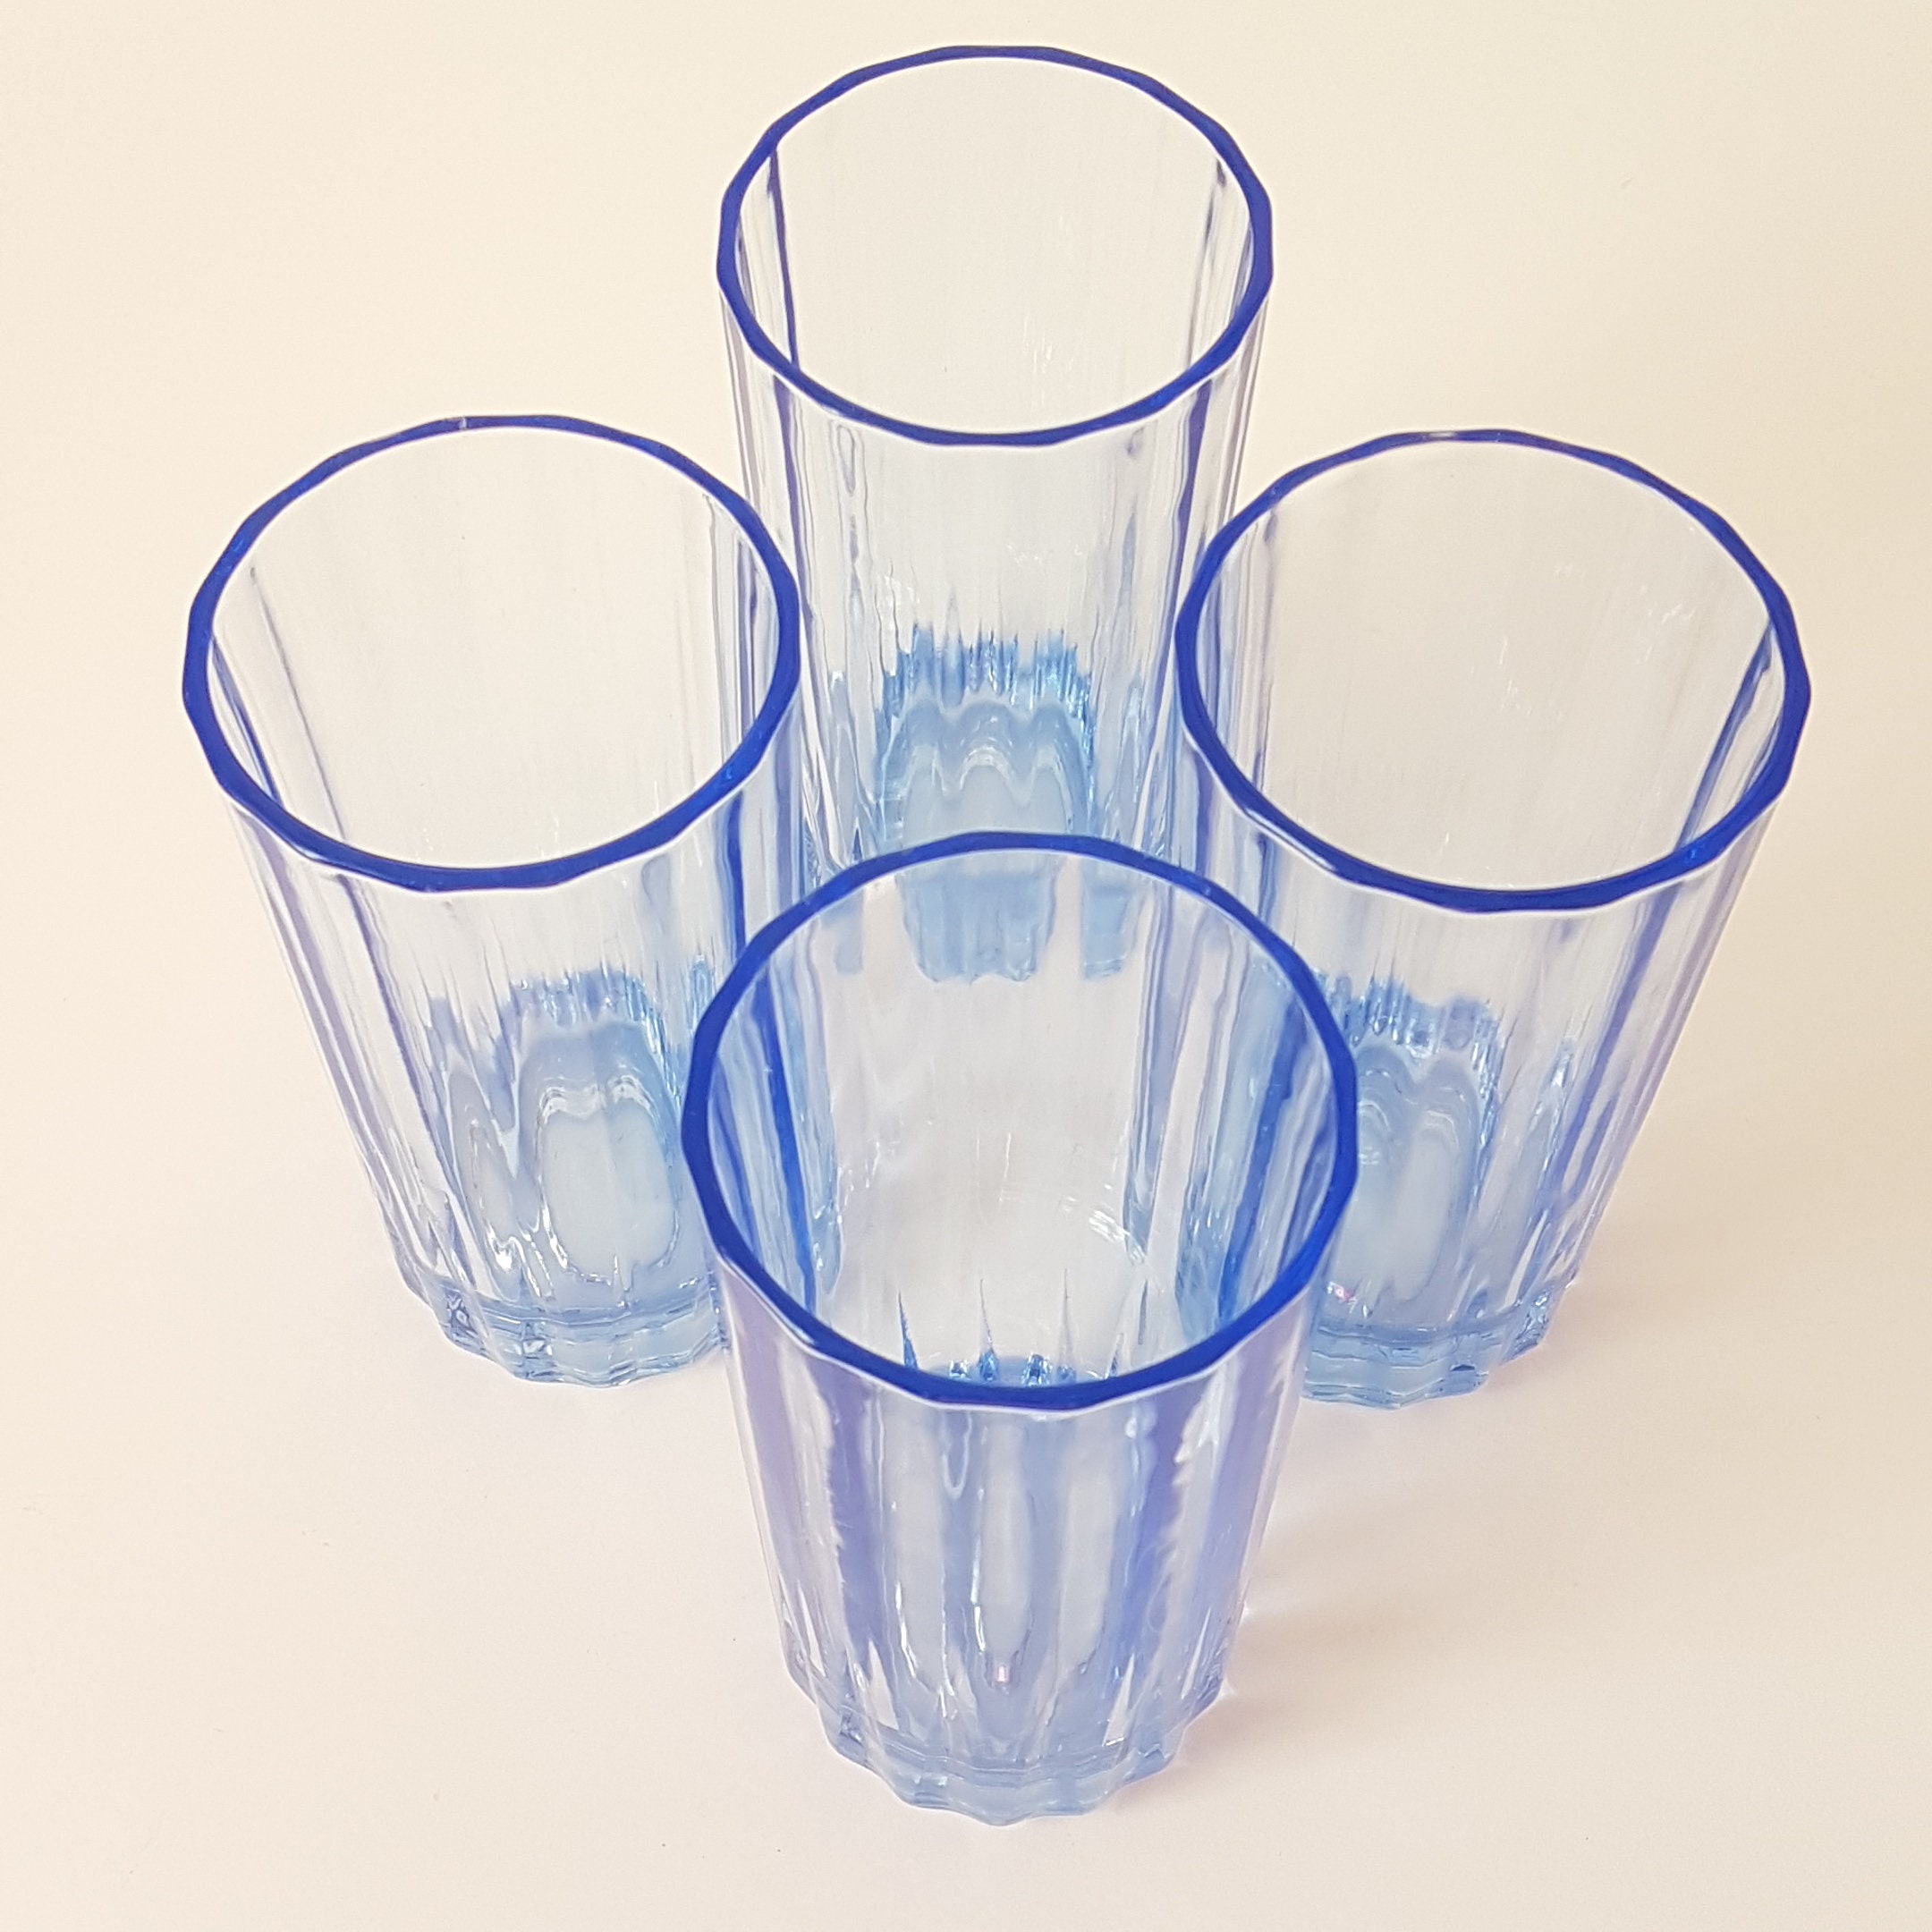 Vintage Glaver's Glass Tumbler Drinking Glasses Set of 4 